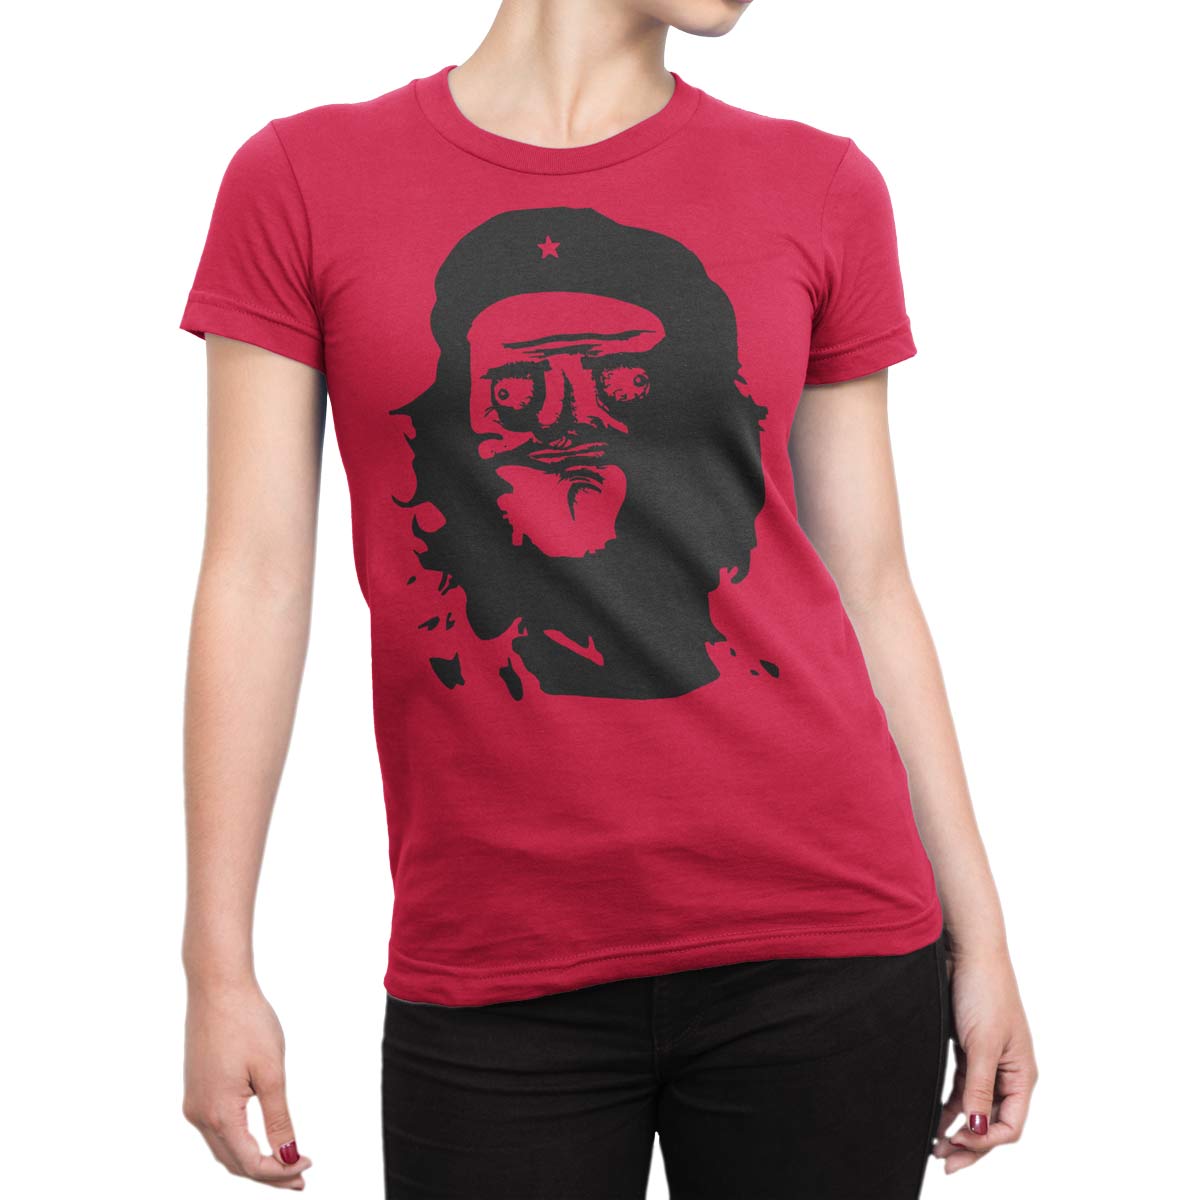 Funny T-Shirts. Meme Guevara Unisex T-Shirt. 100% Ultra Cotton.